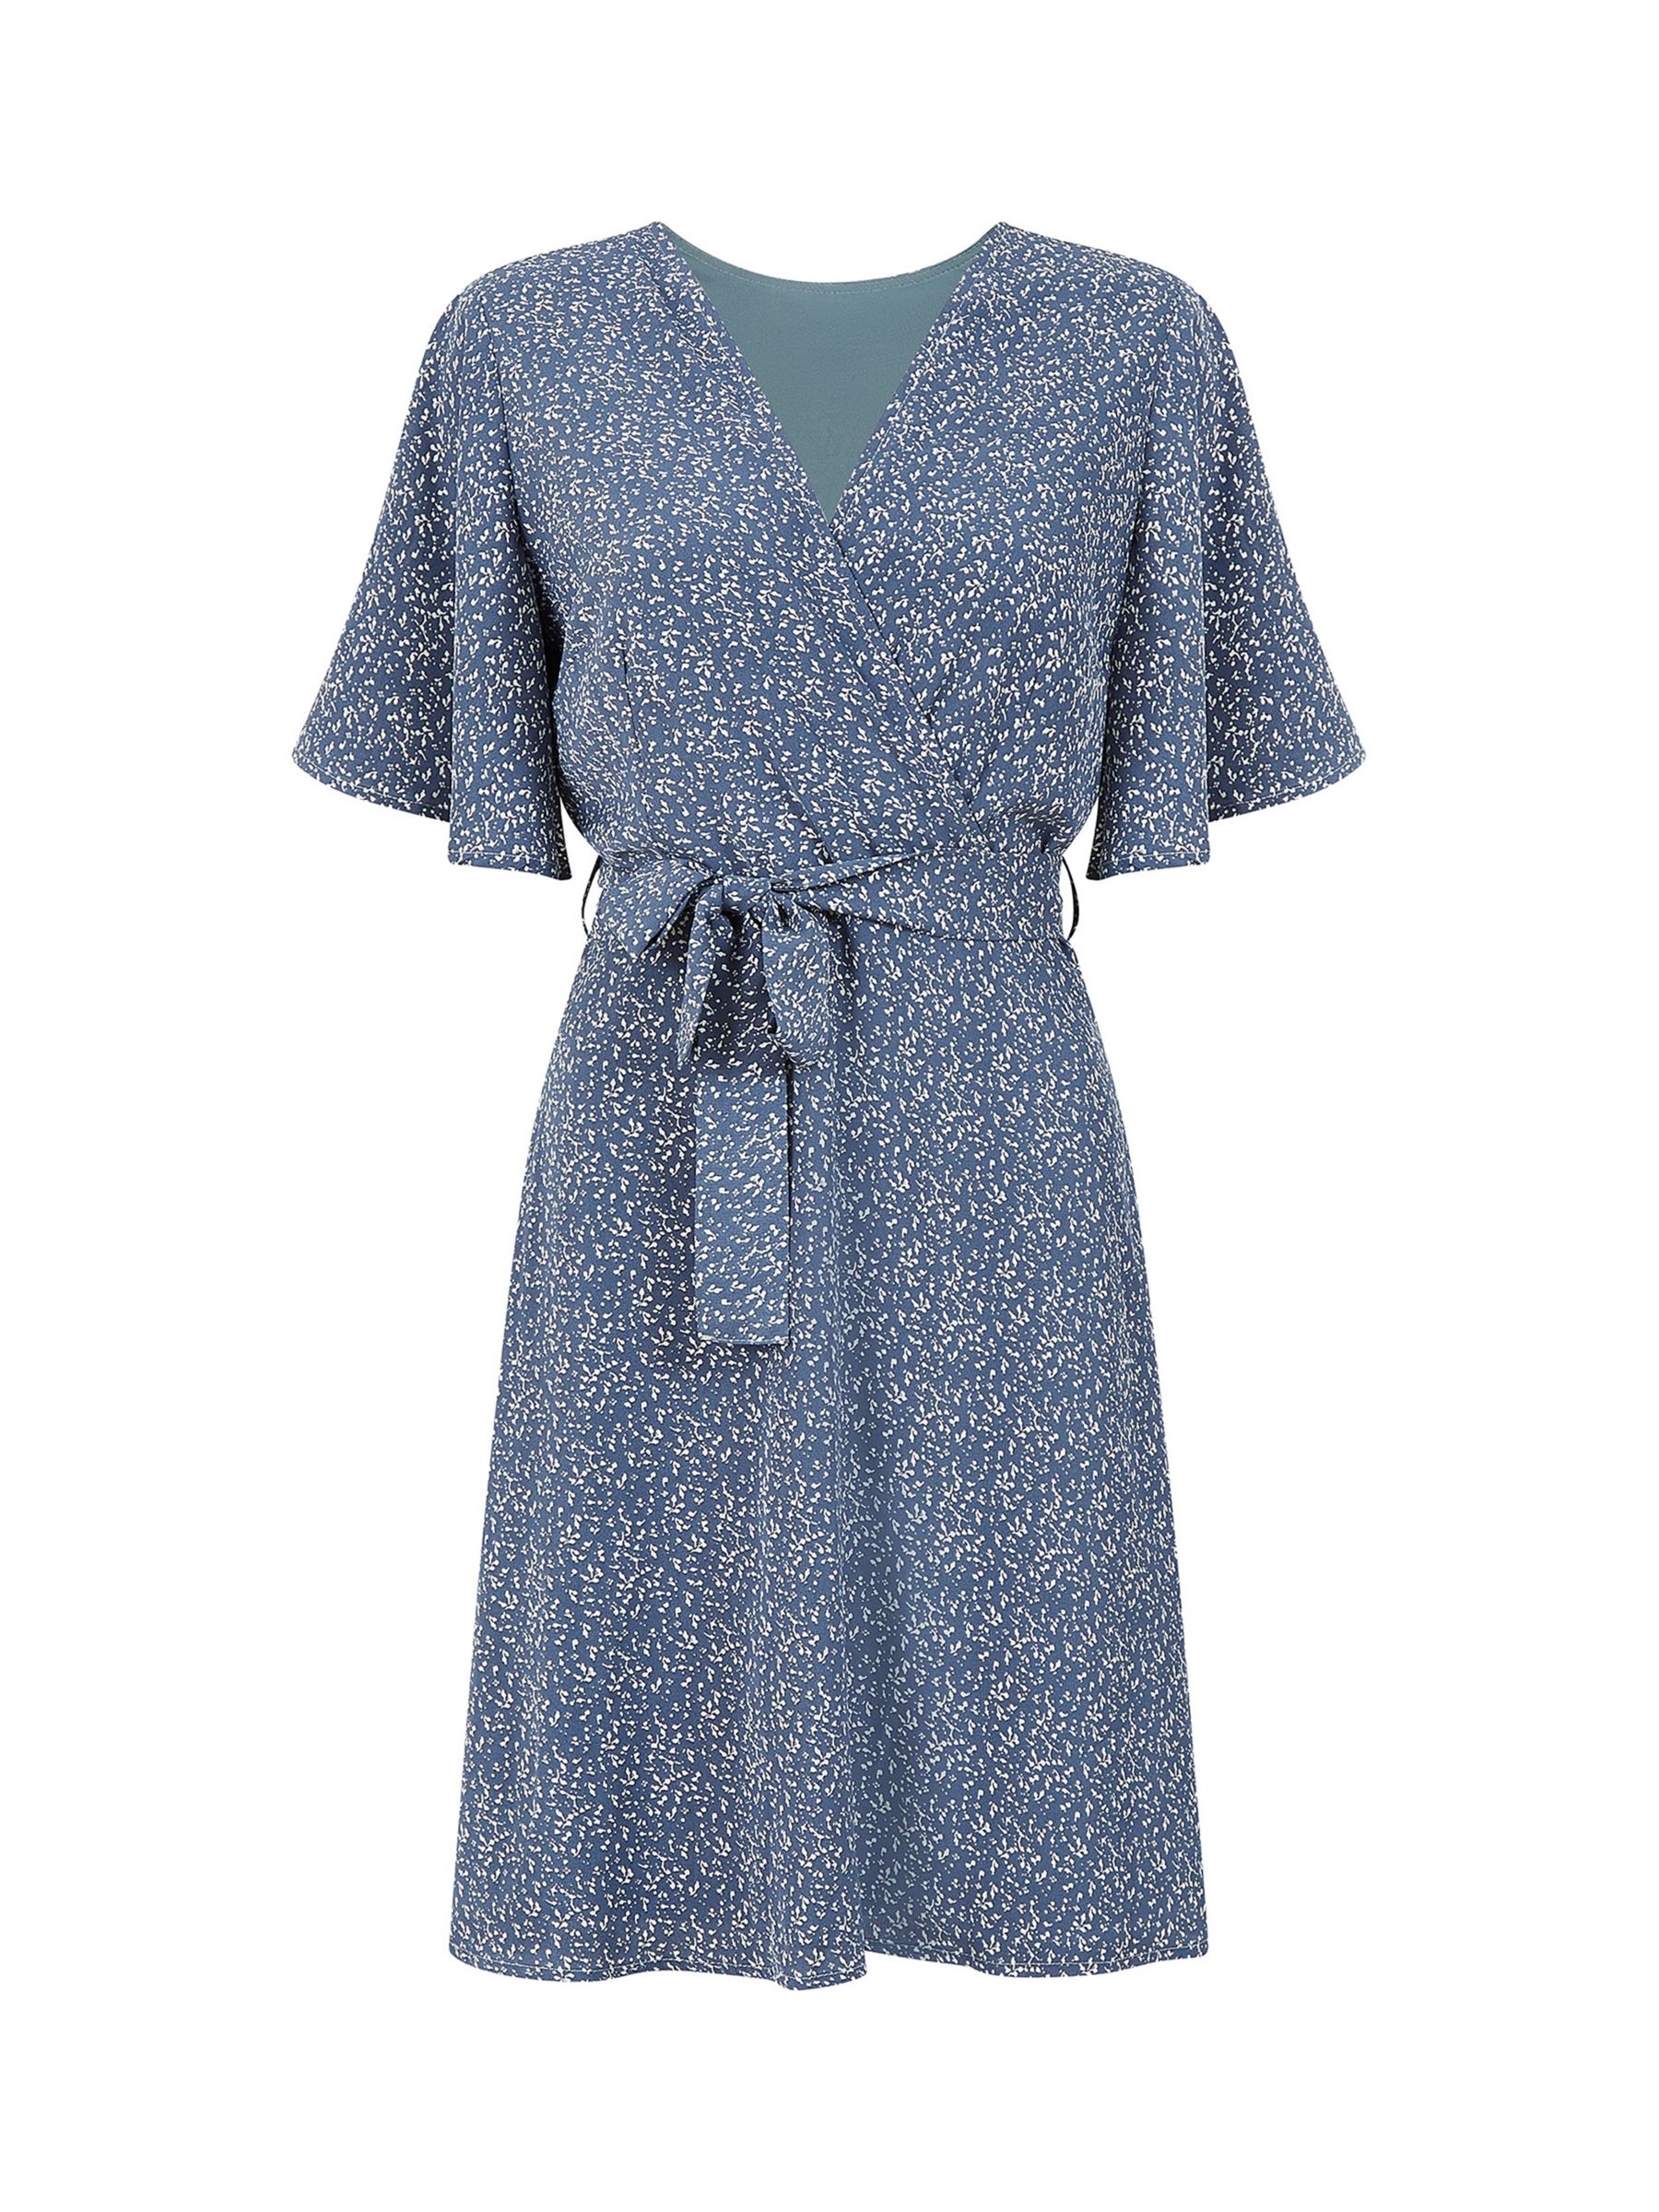 Buy Mela London Abstract Dot Wrap Mini Dress, Blue/Multi Online at johnlewis.com